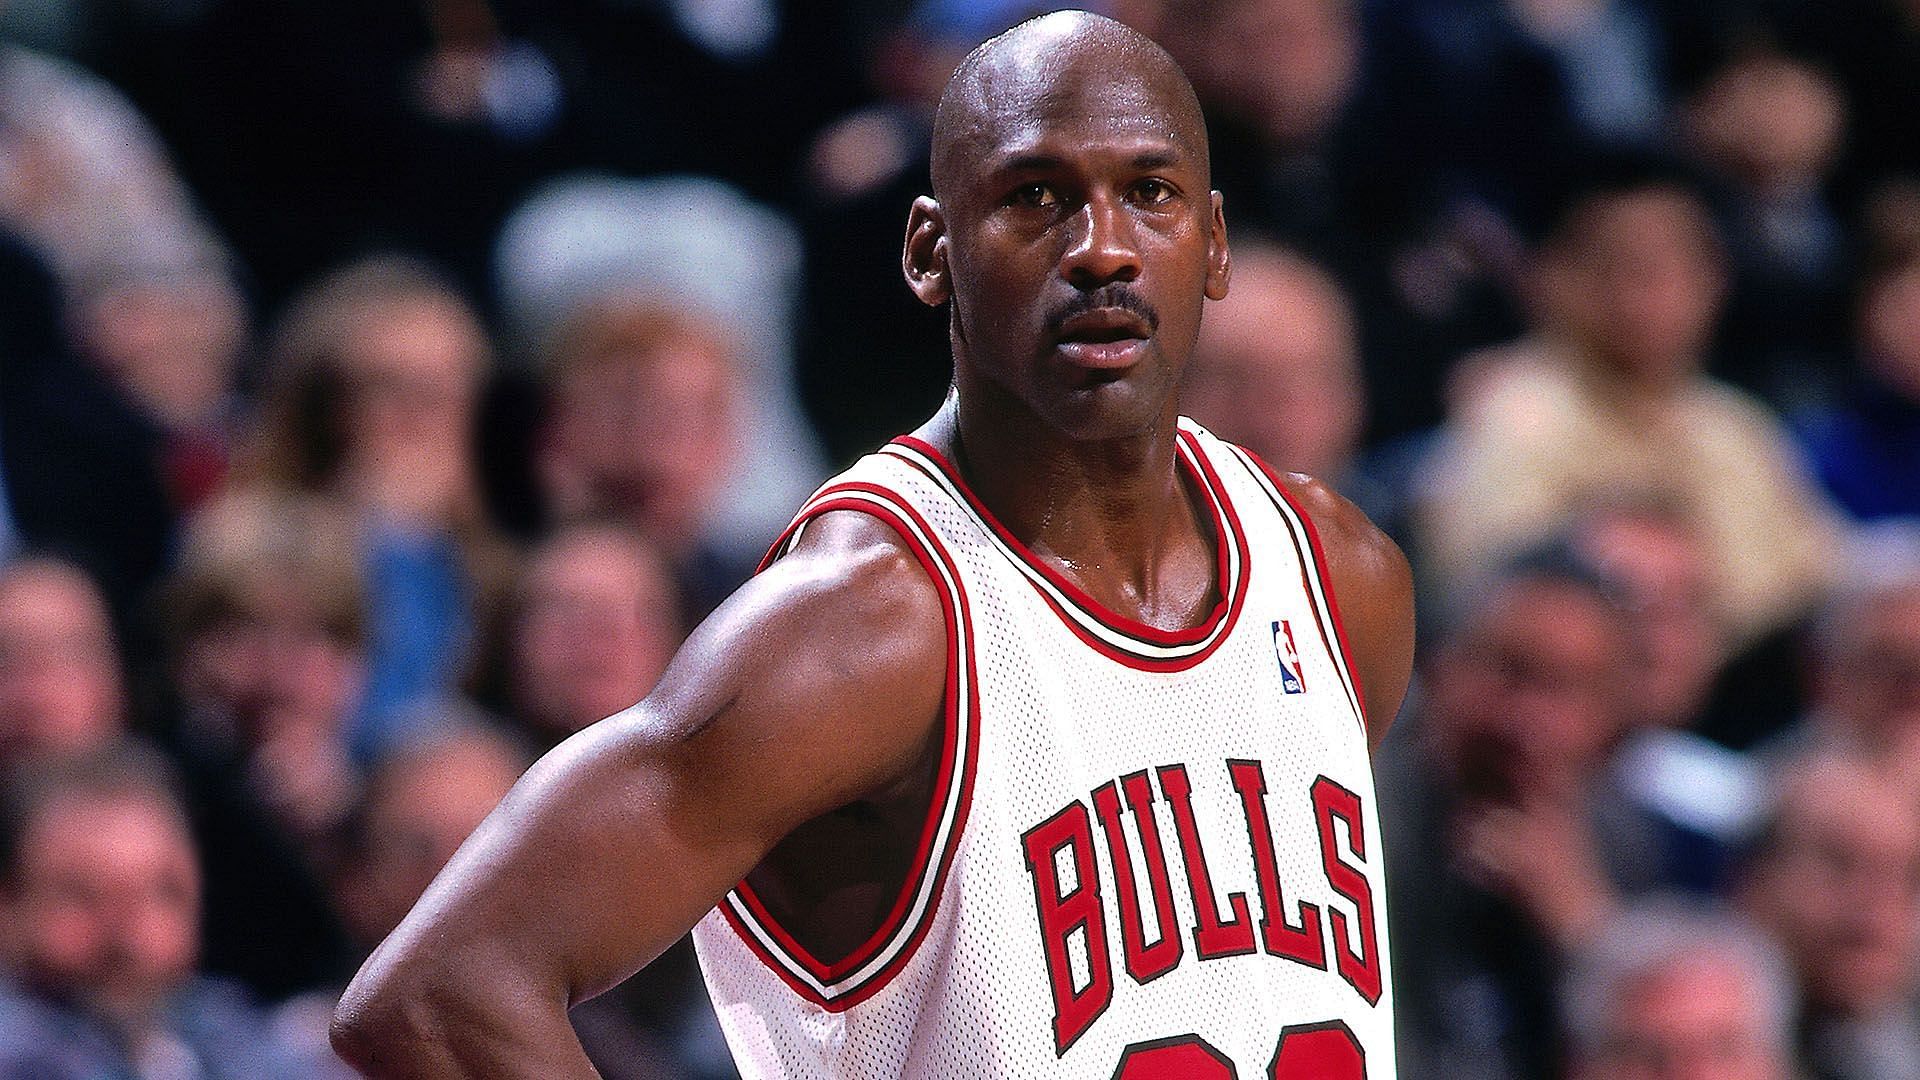 Michael Jordan at 47 embarrassed Bobcats starters, per Stephen Jackson